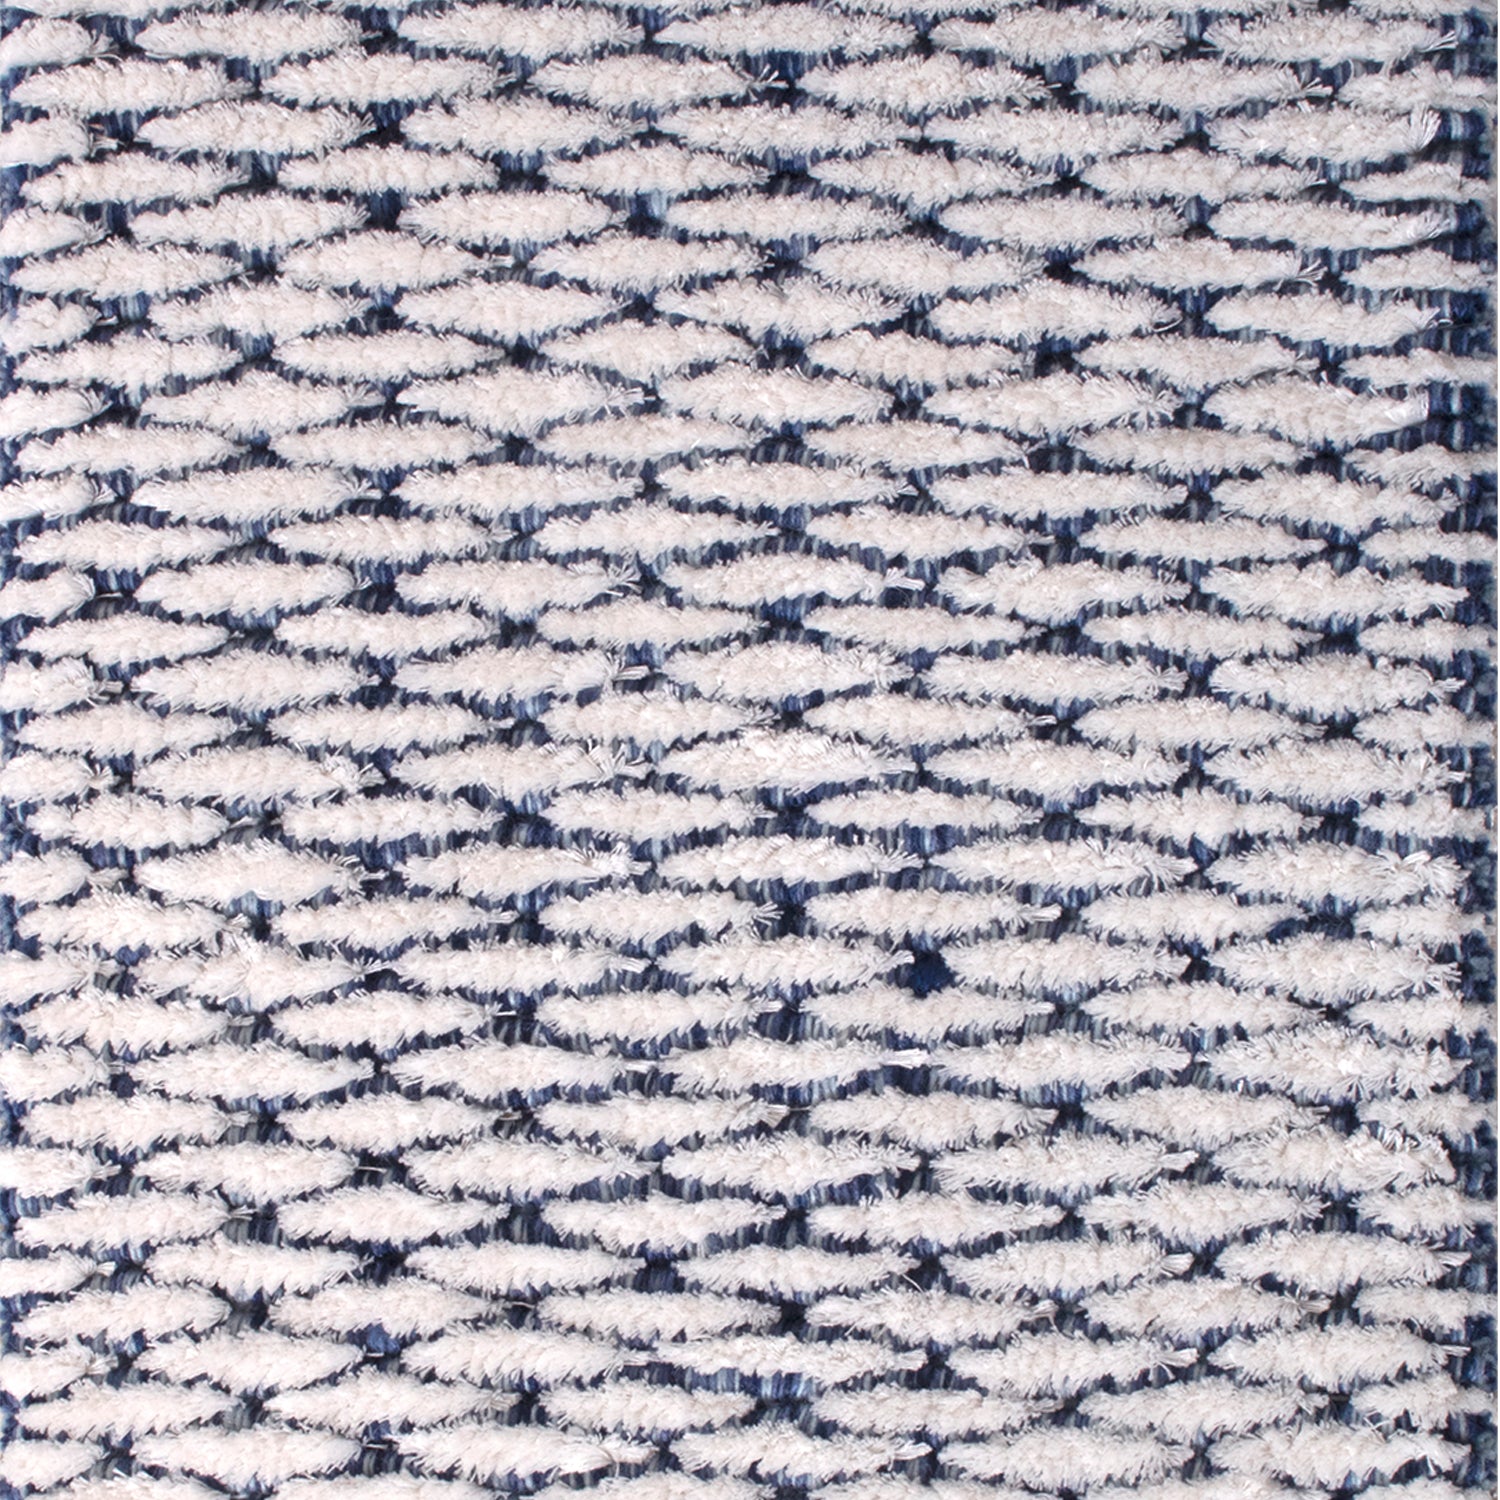 Wool-blend broadloom carpet swatch in a textured lattice print in navy on a white field.